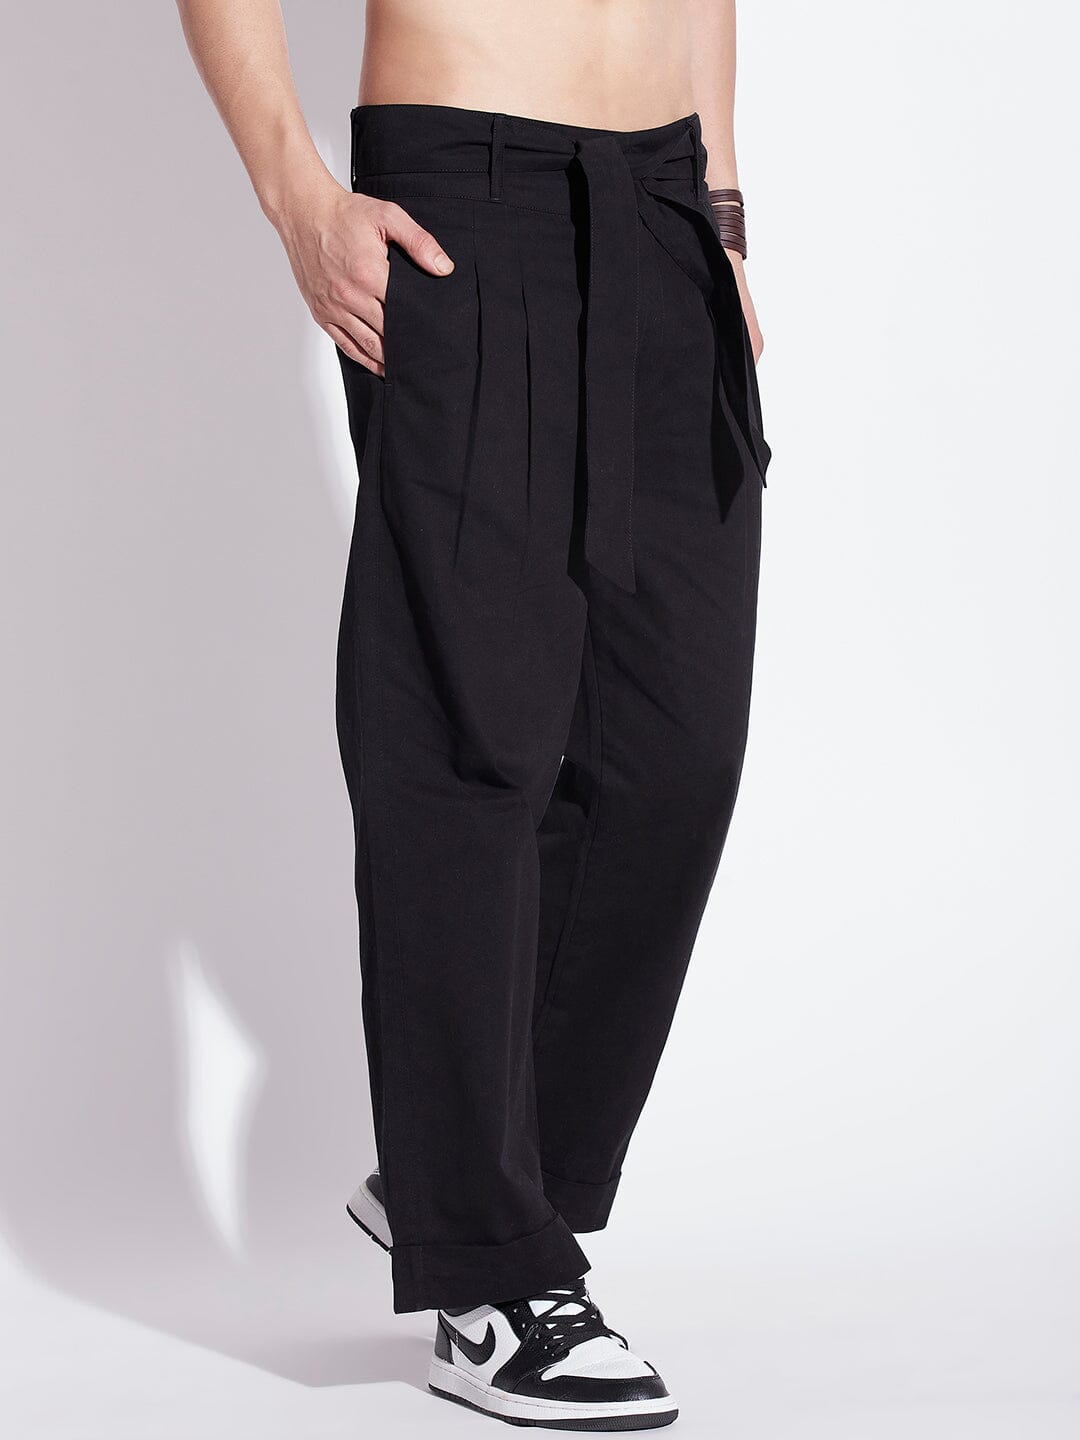 Cato Fashions | Cato Plus Size Curvy Trouser Pants